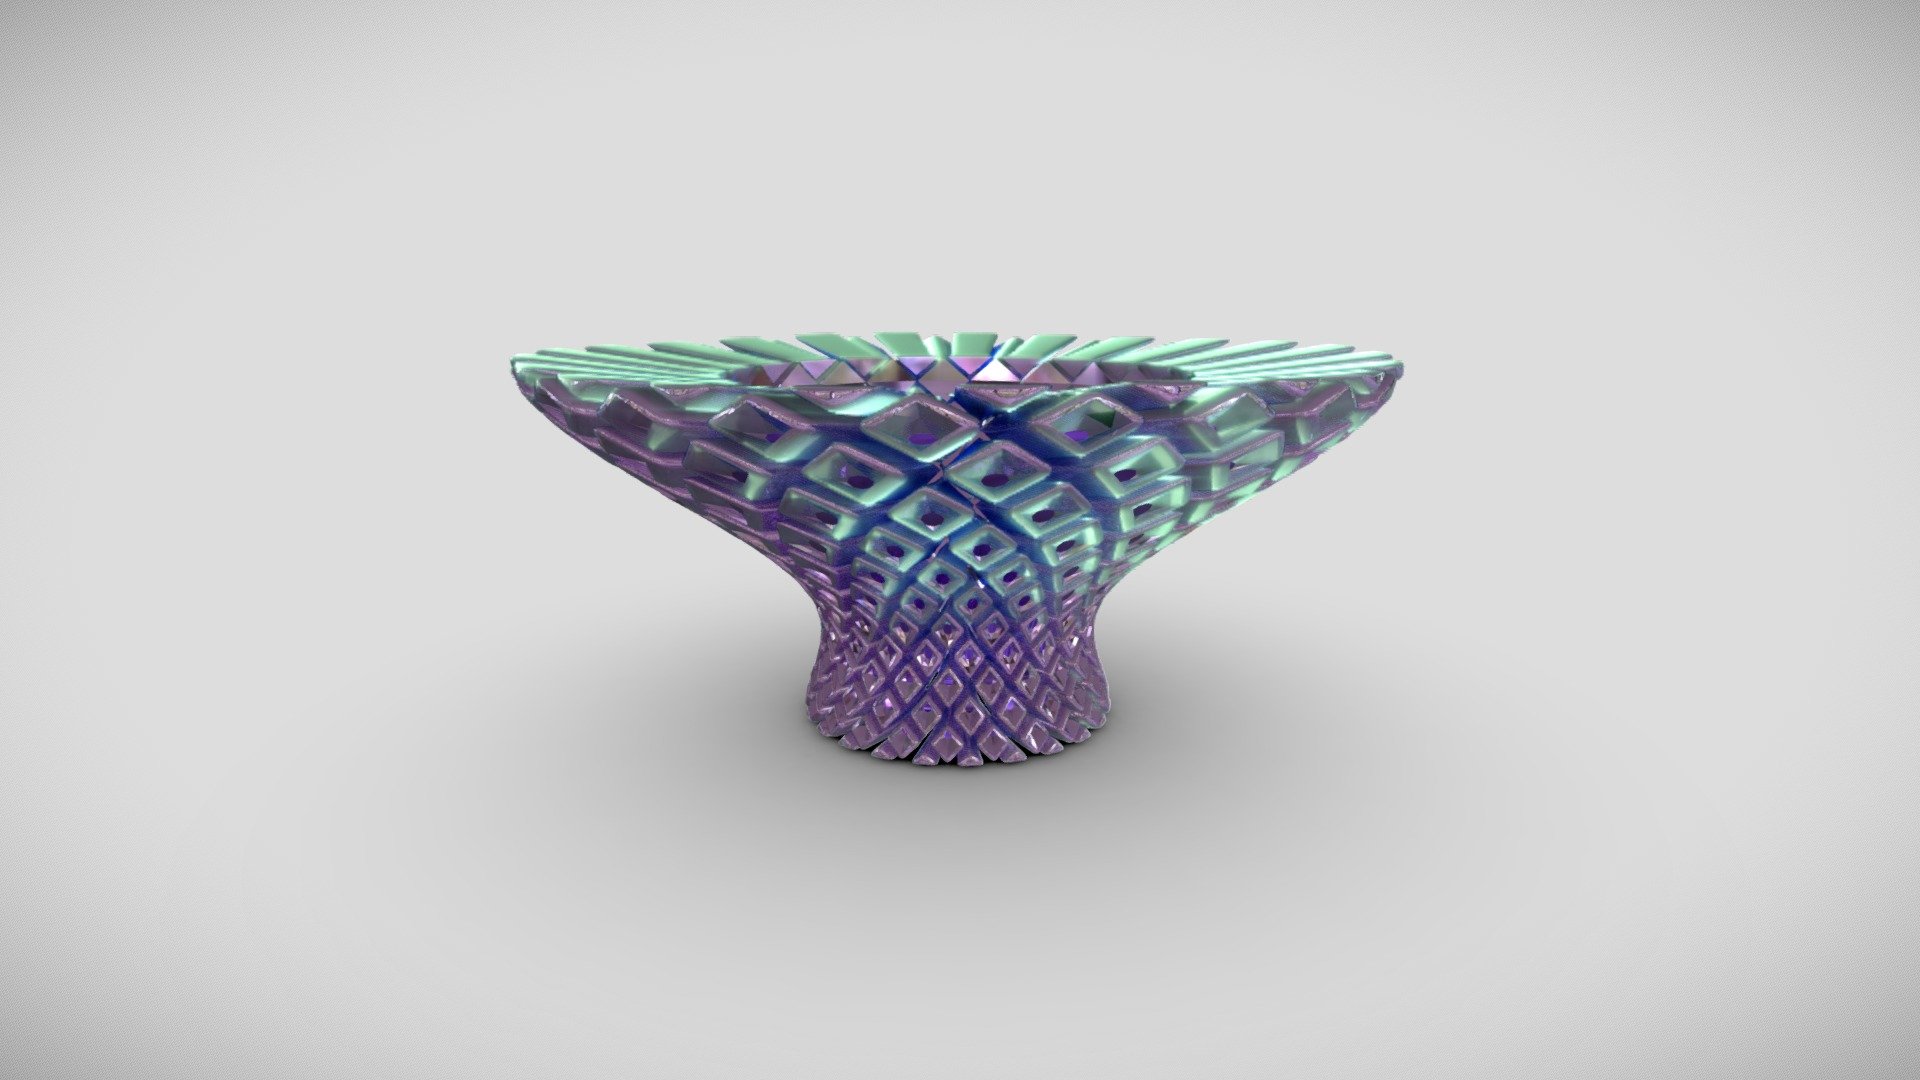 Vase Please like if you download it - Vase Please like if you download it - Download Free 3D model by VRA (@architect47) 3d model